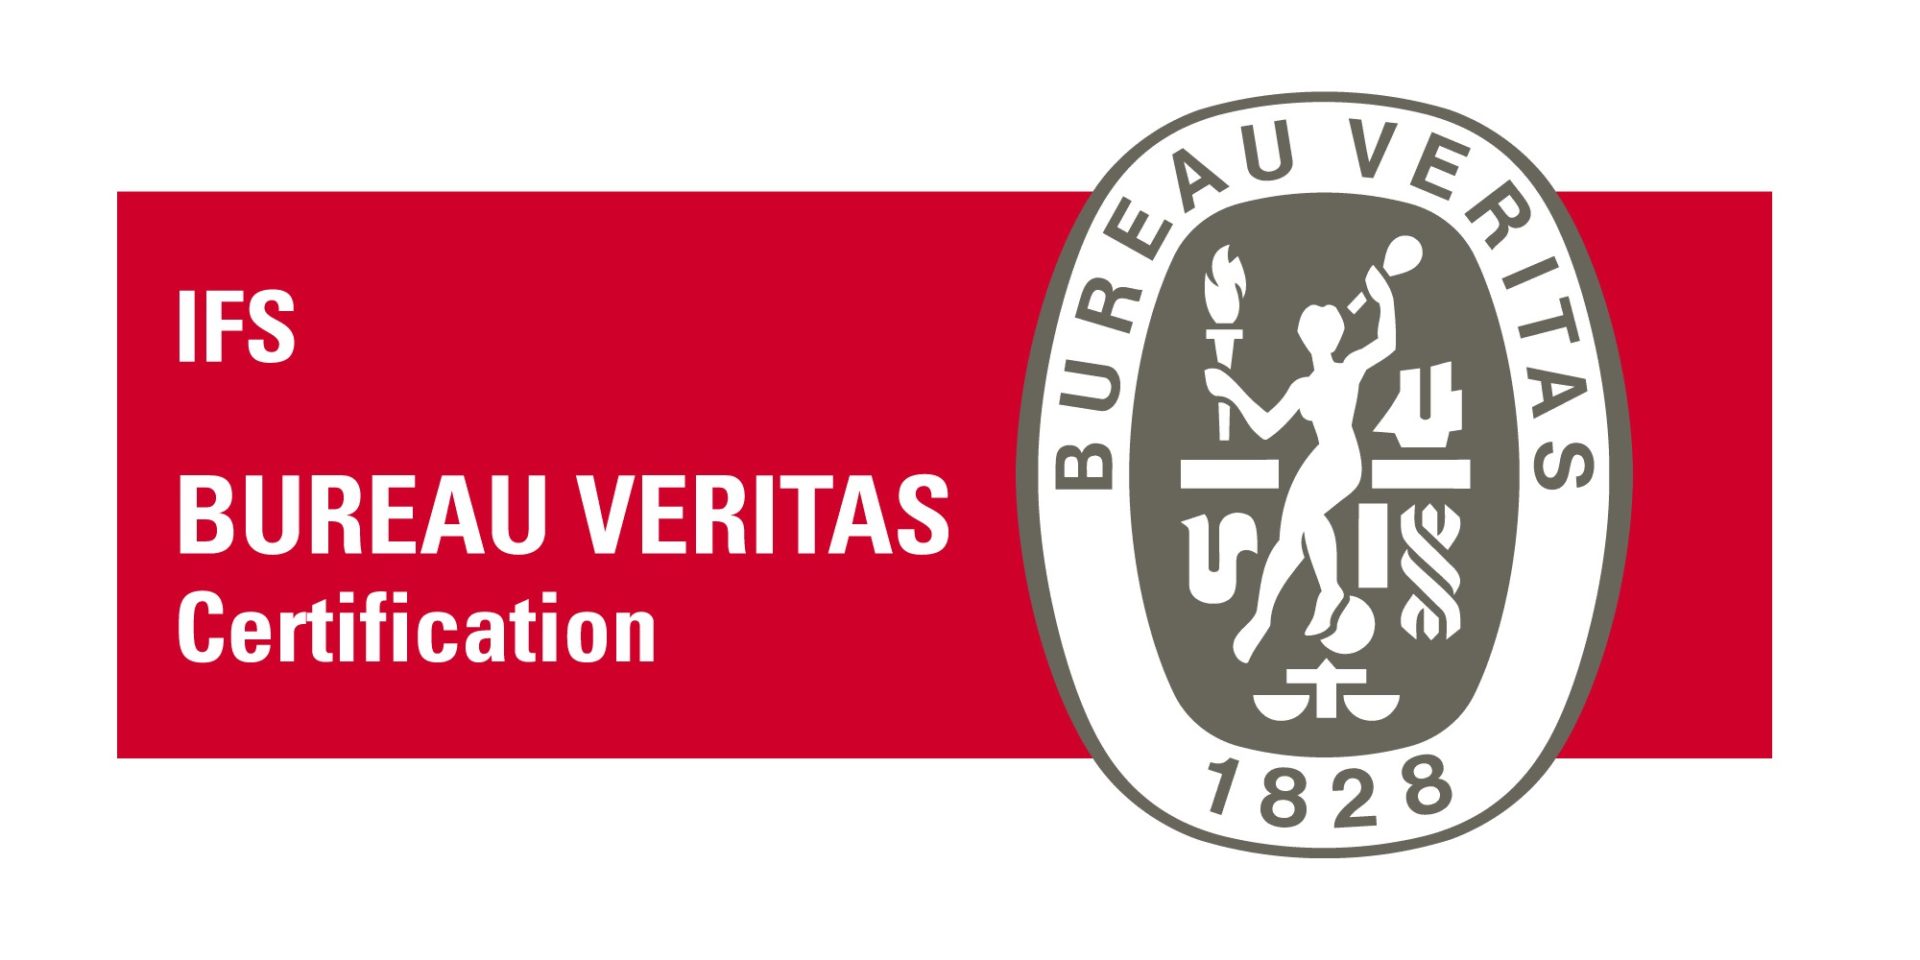 BV_Certification_IFS_2-logo